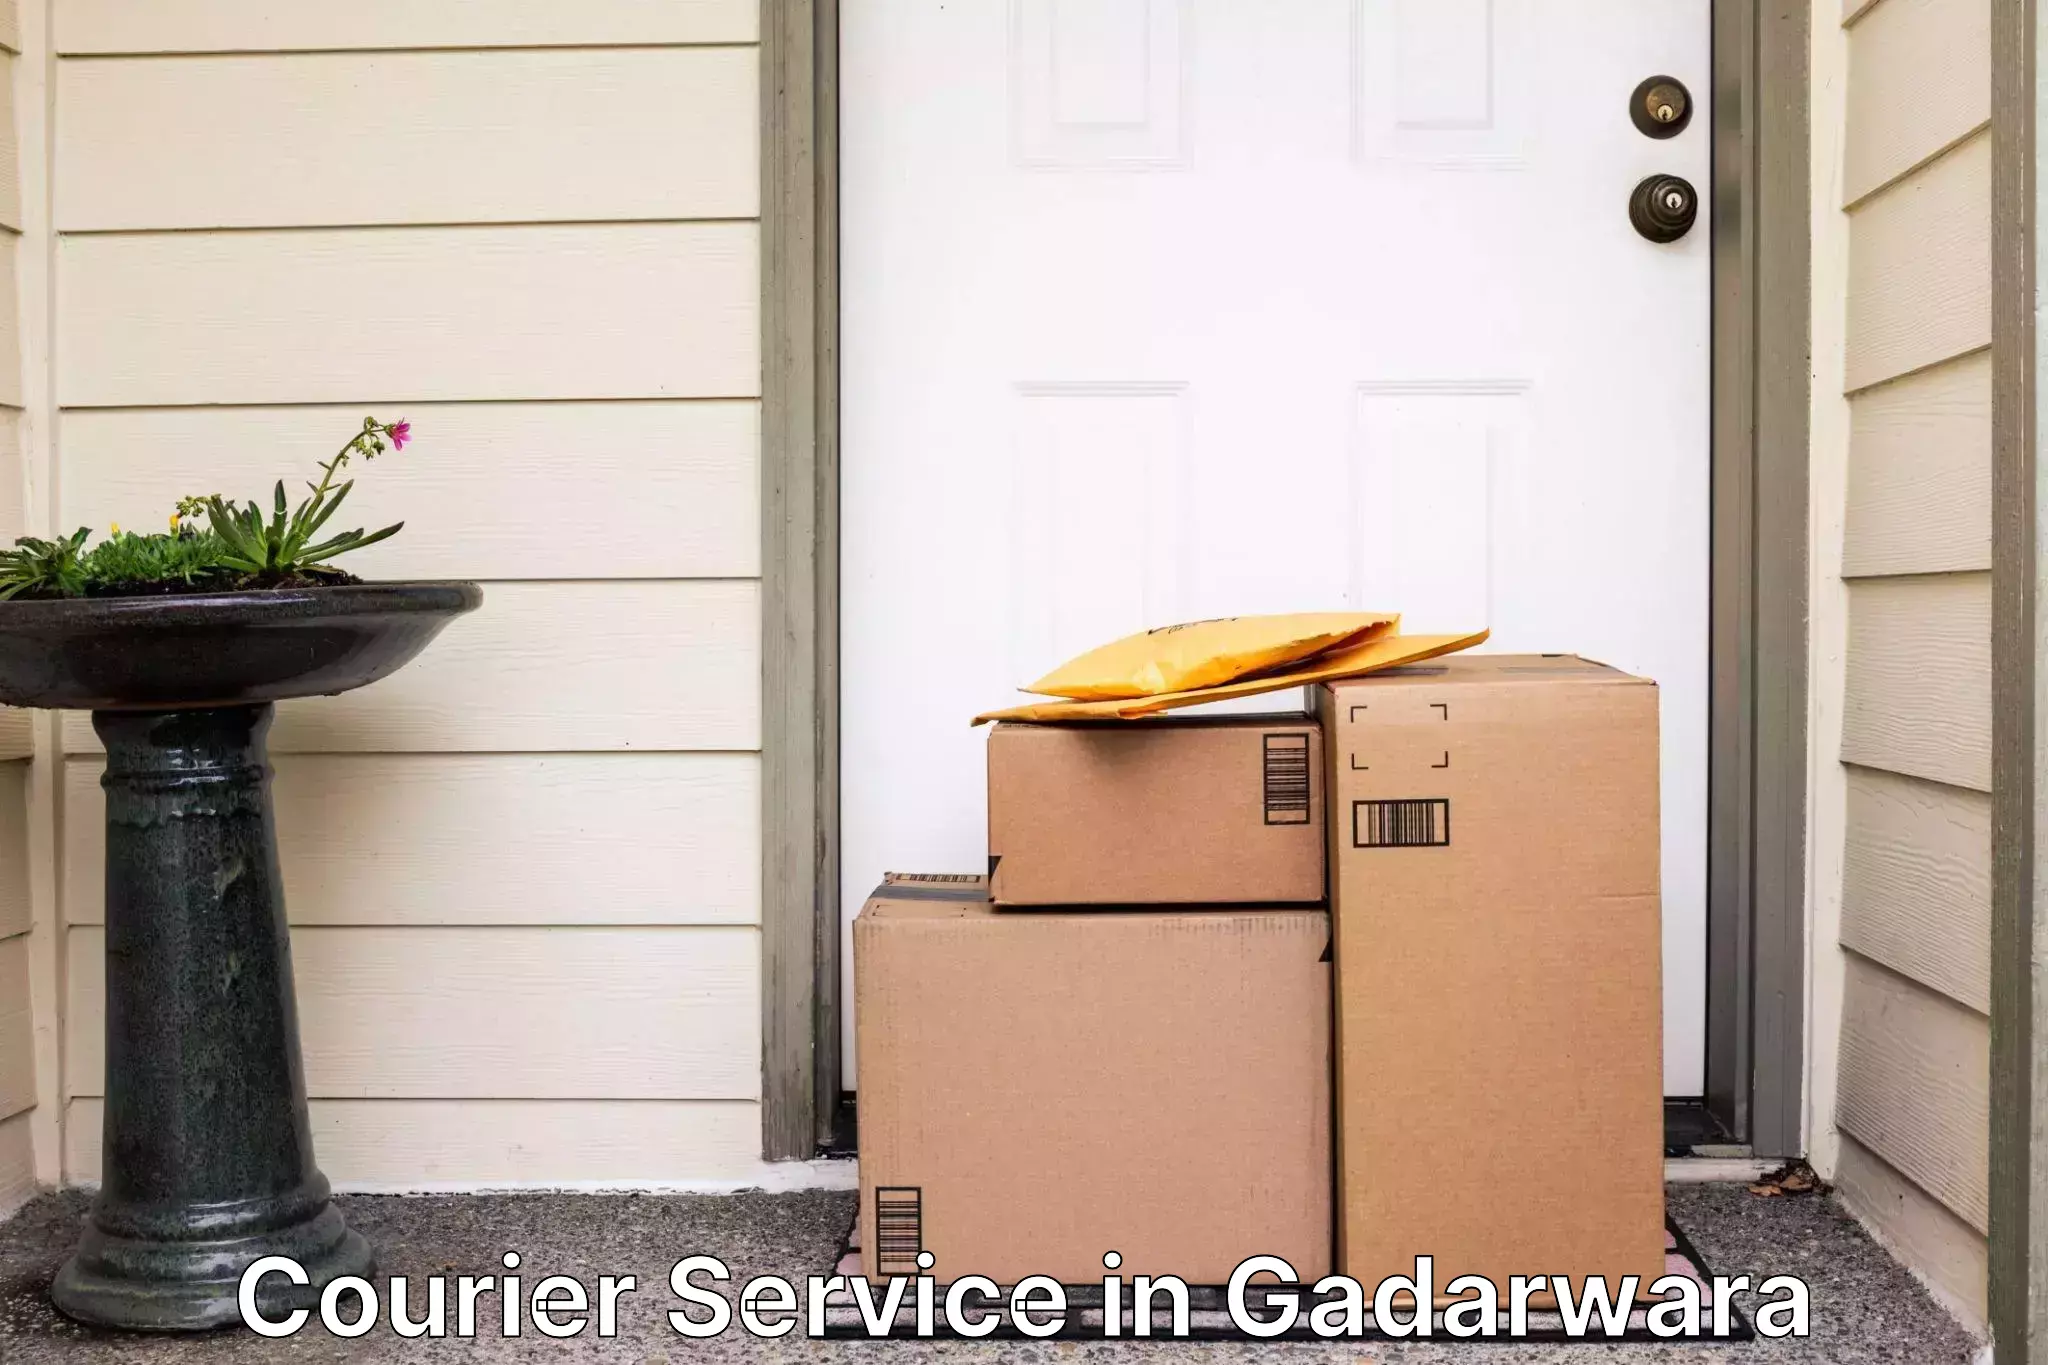 Multi-service courier options in Gadarwara